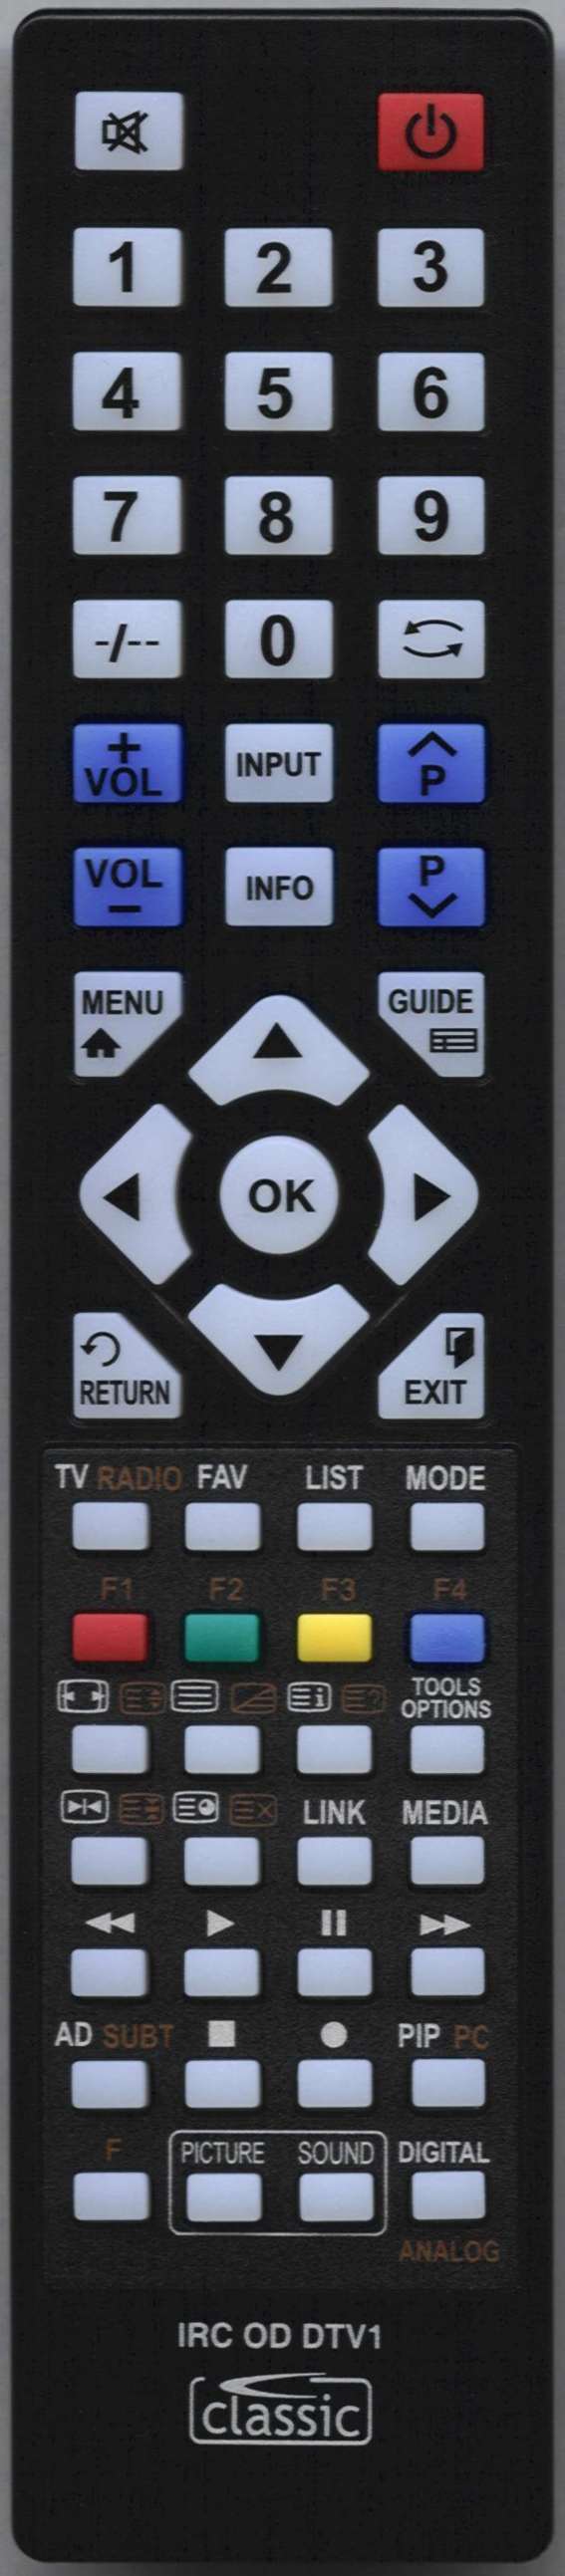 JVC RM-C1241 Remote Control